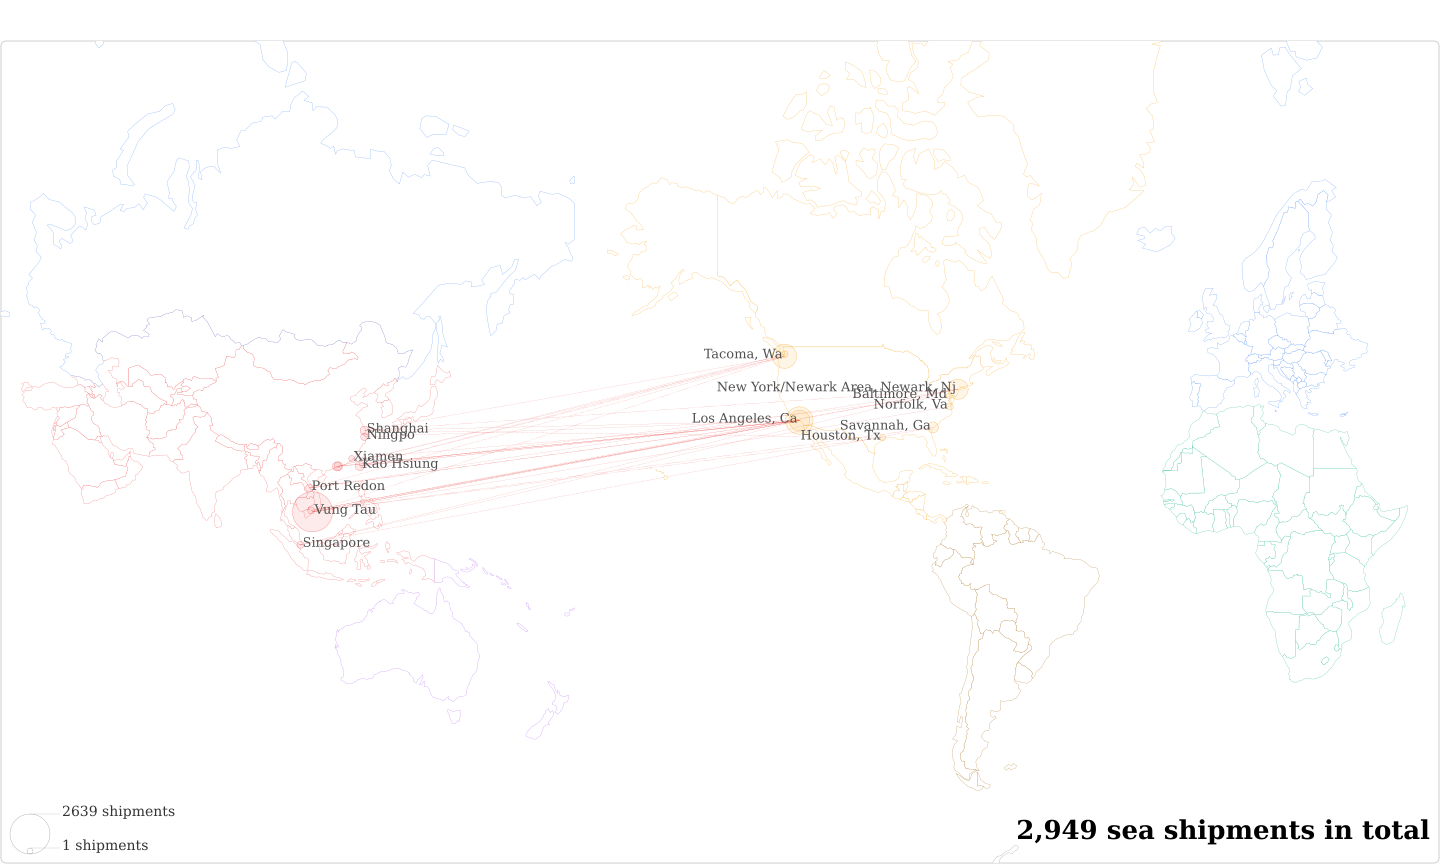 Hansae Tn's Imports Per Country Map